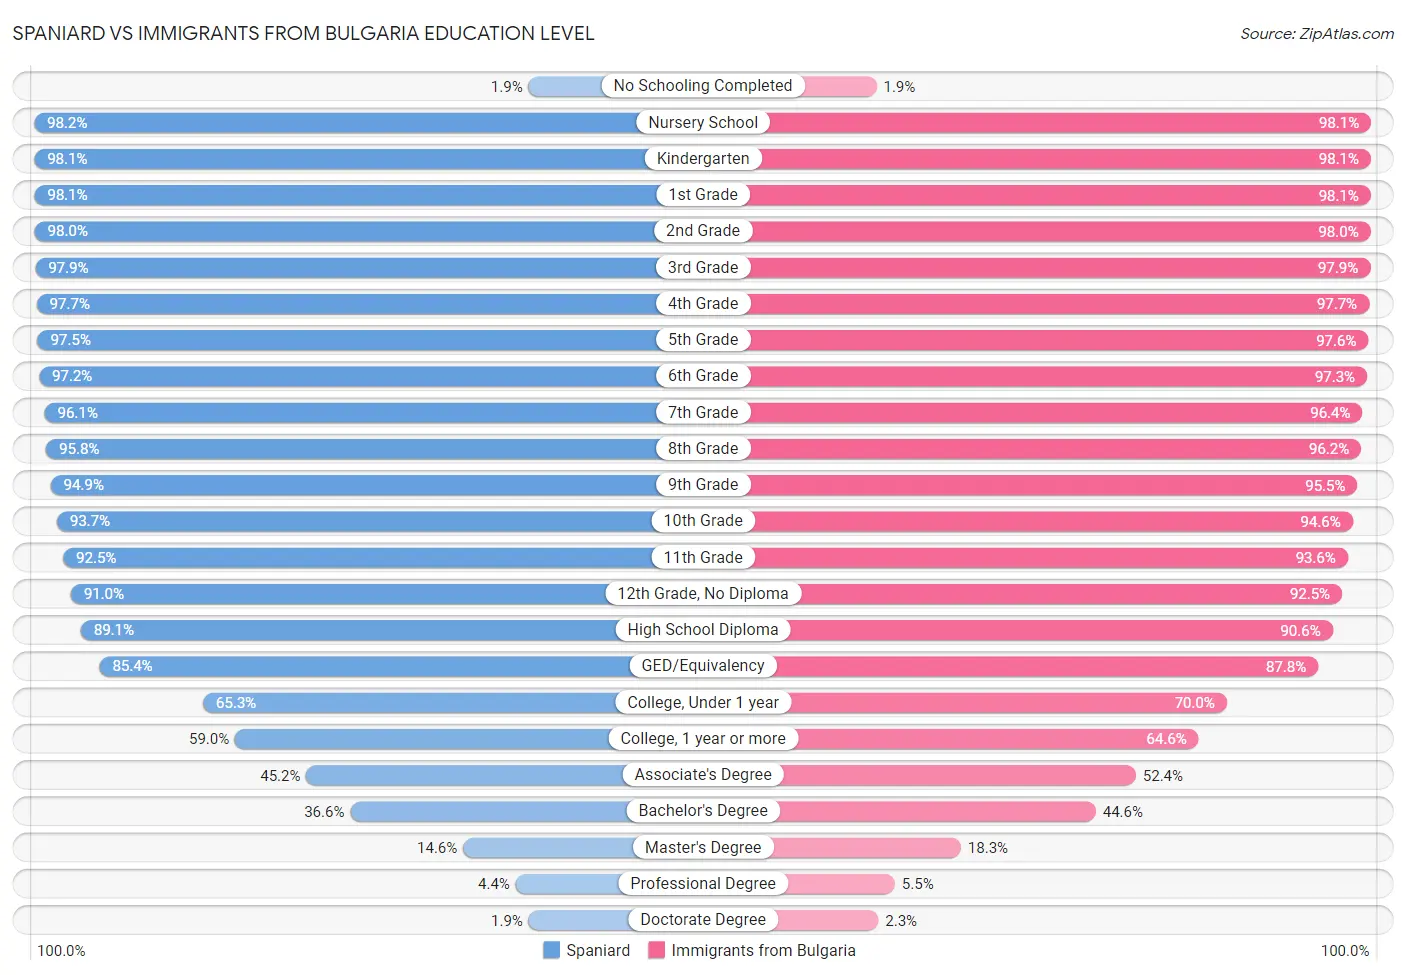 Spaniard vs Immigrants from Bulgaria Education Level